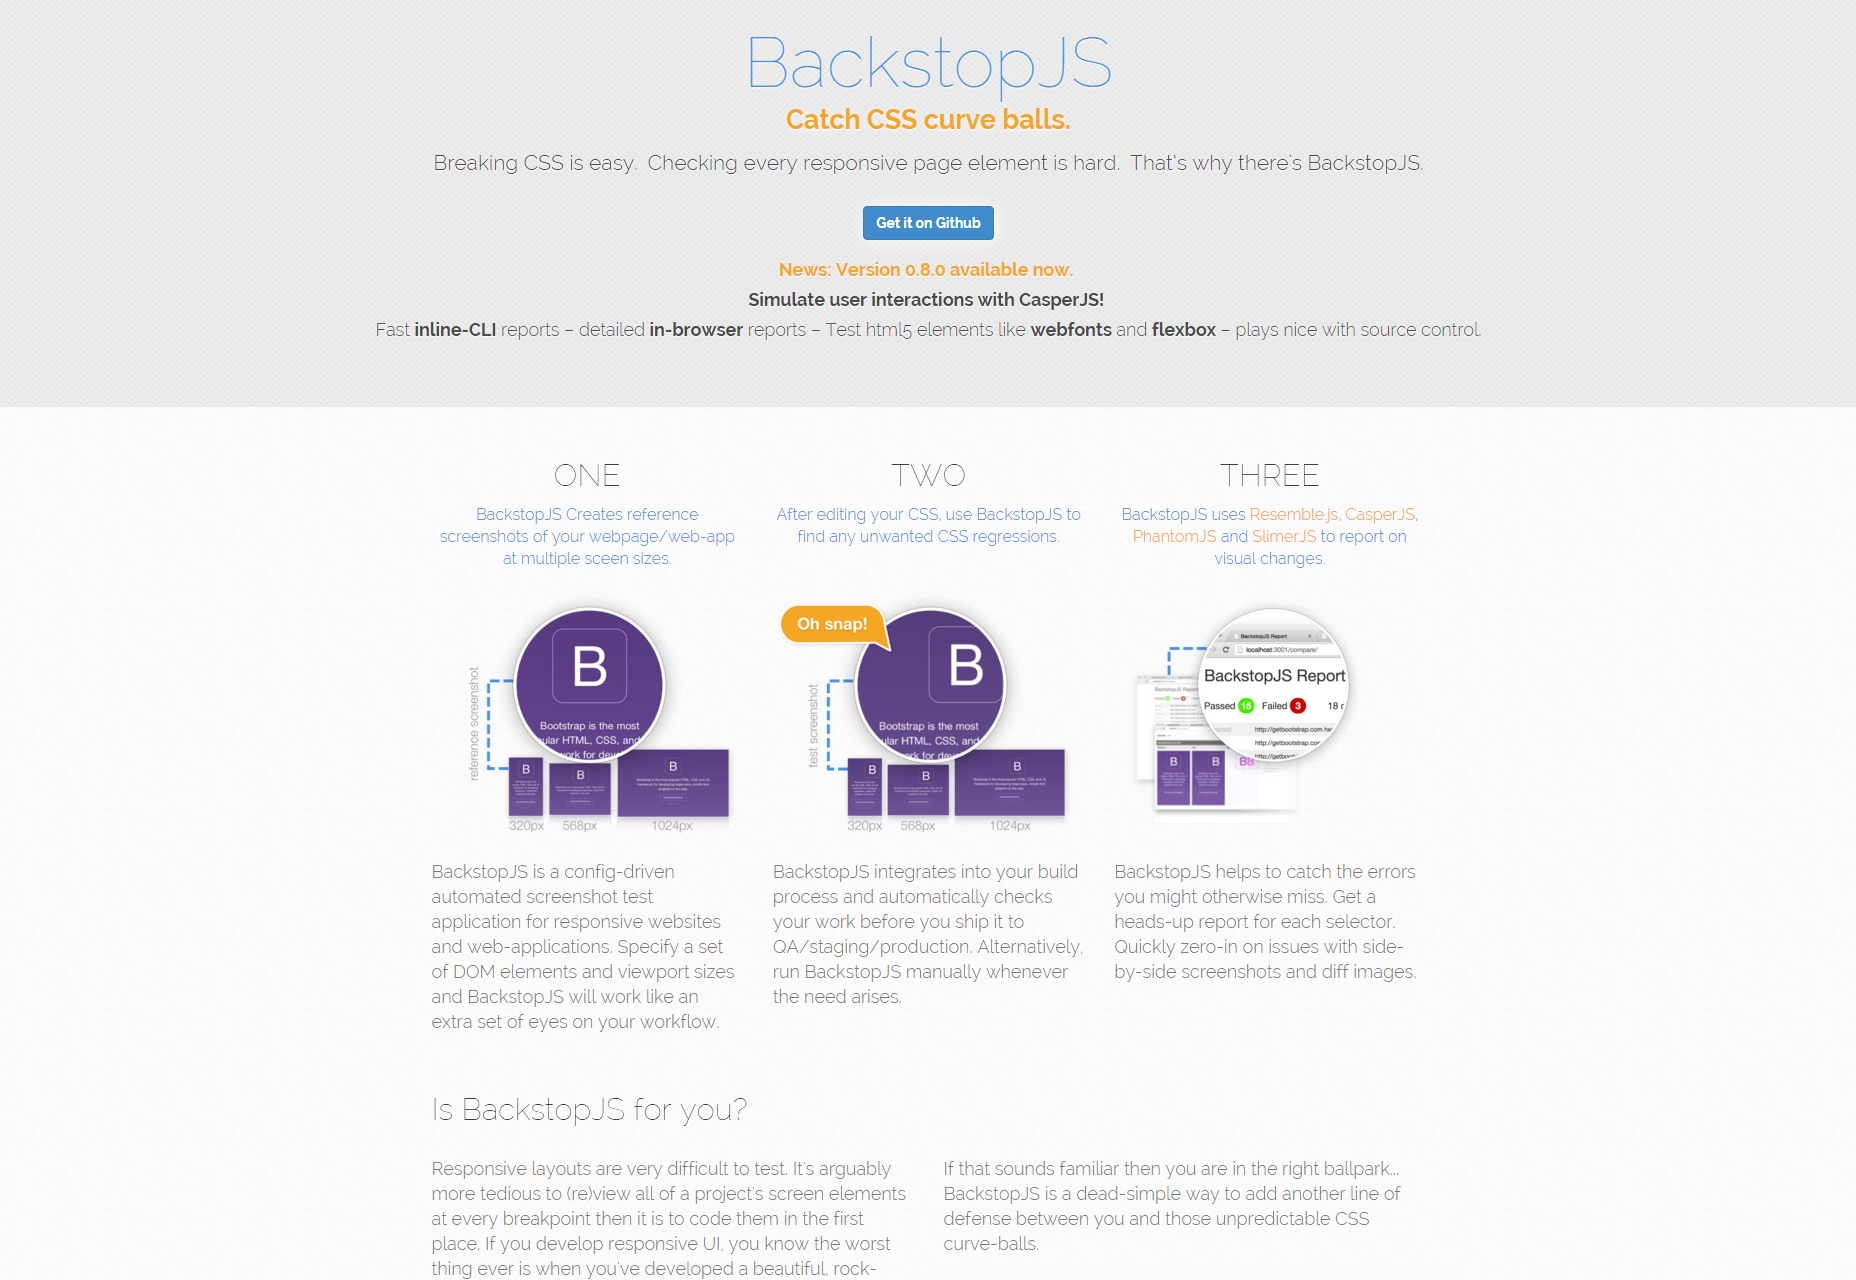 BackstopJS: Config-driven Screenshot Test Application